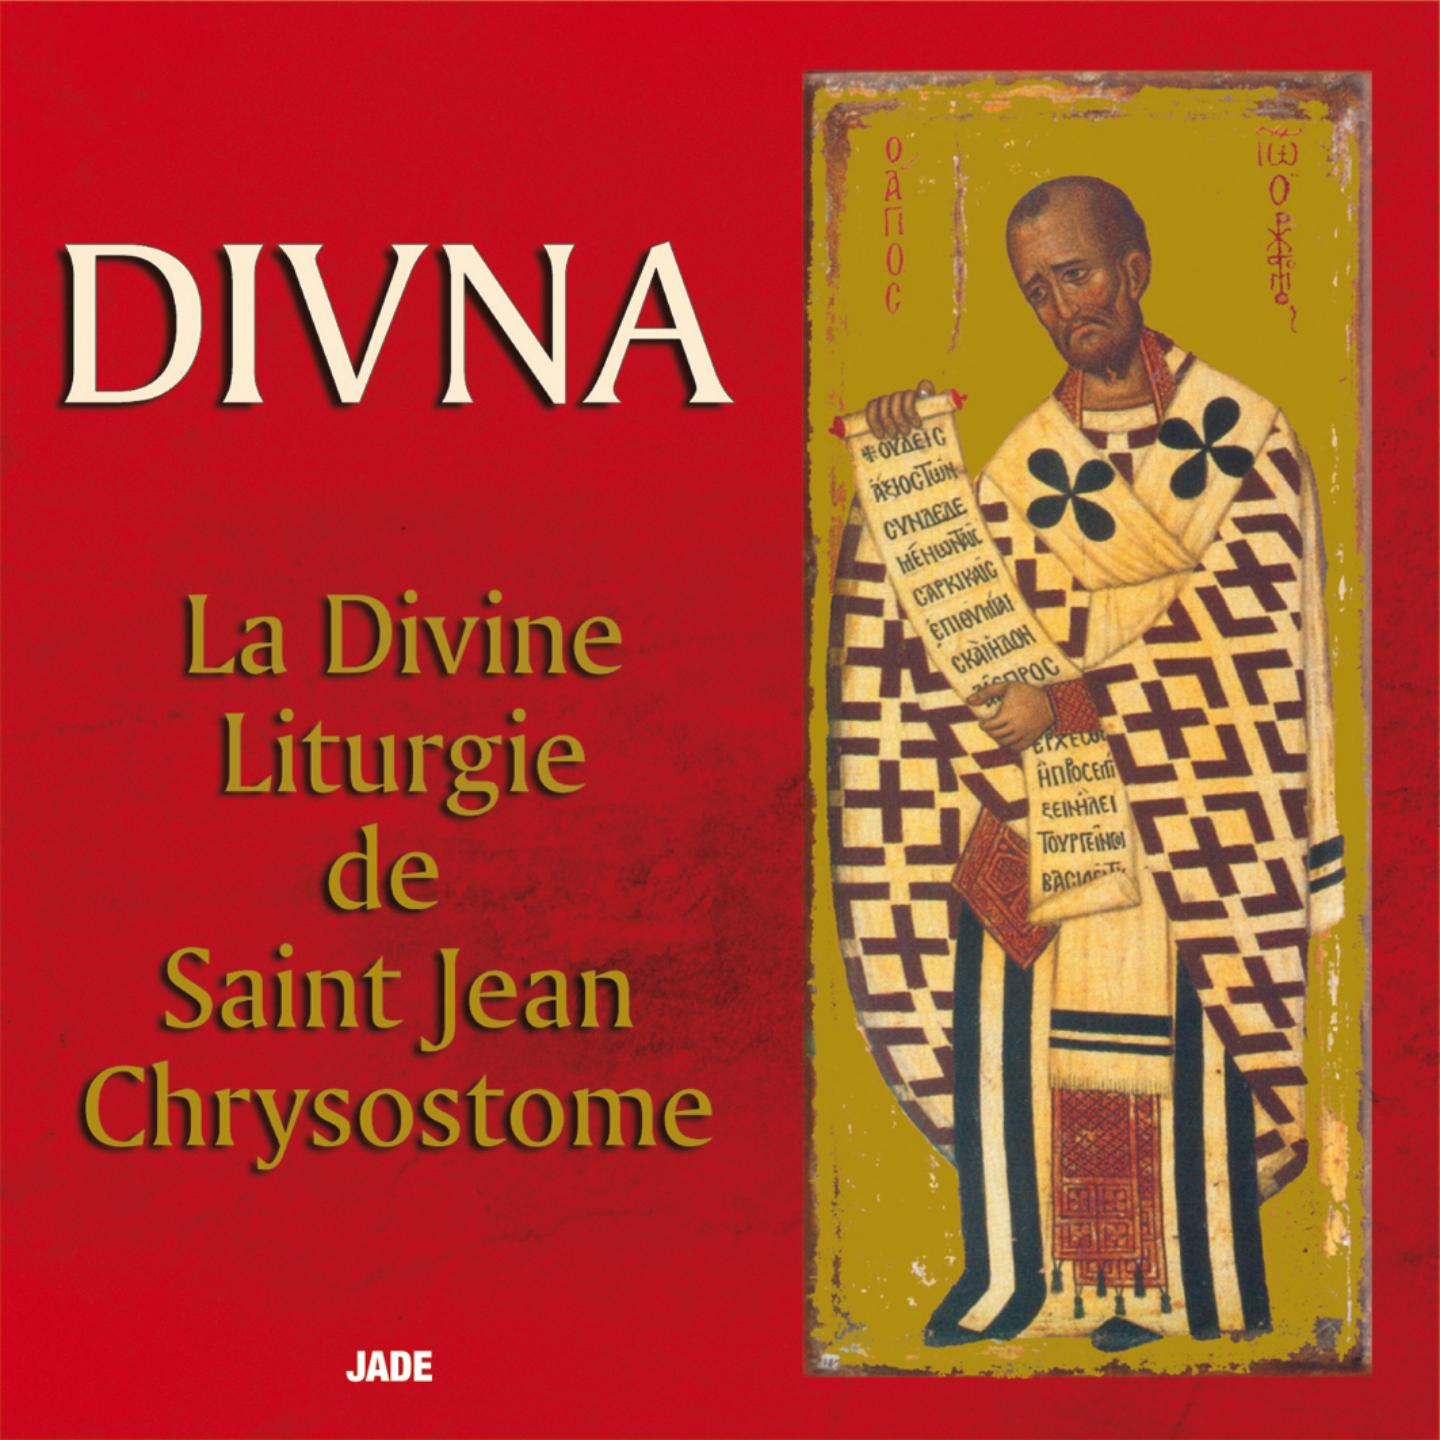 La Divine Liturgie de Saint Jean Chrysostome